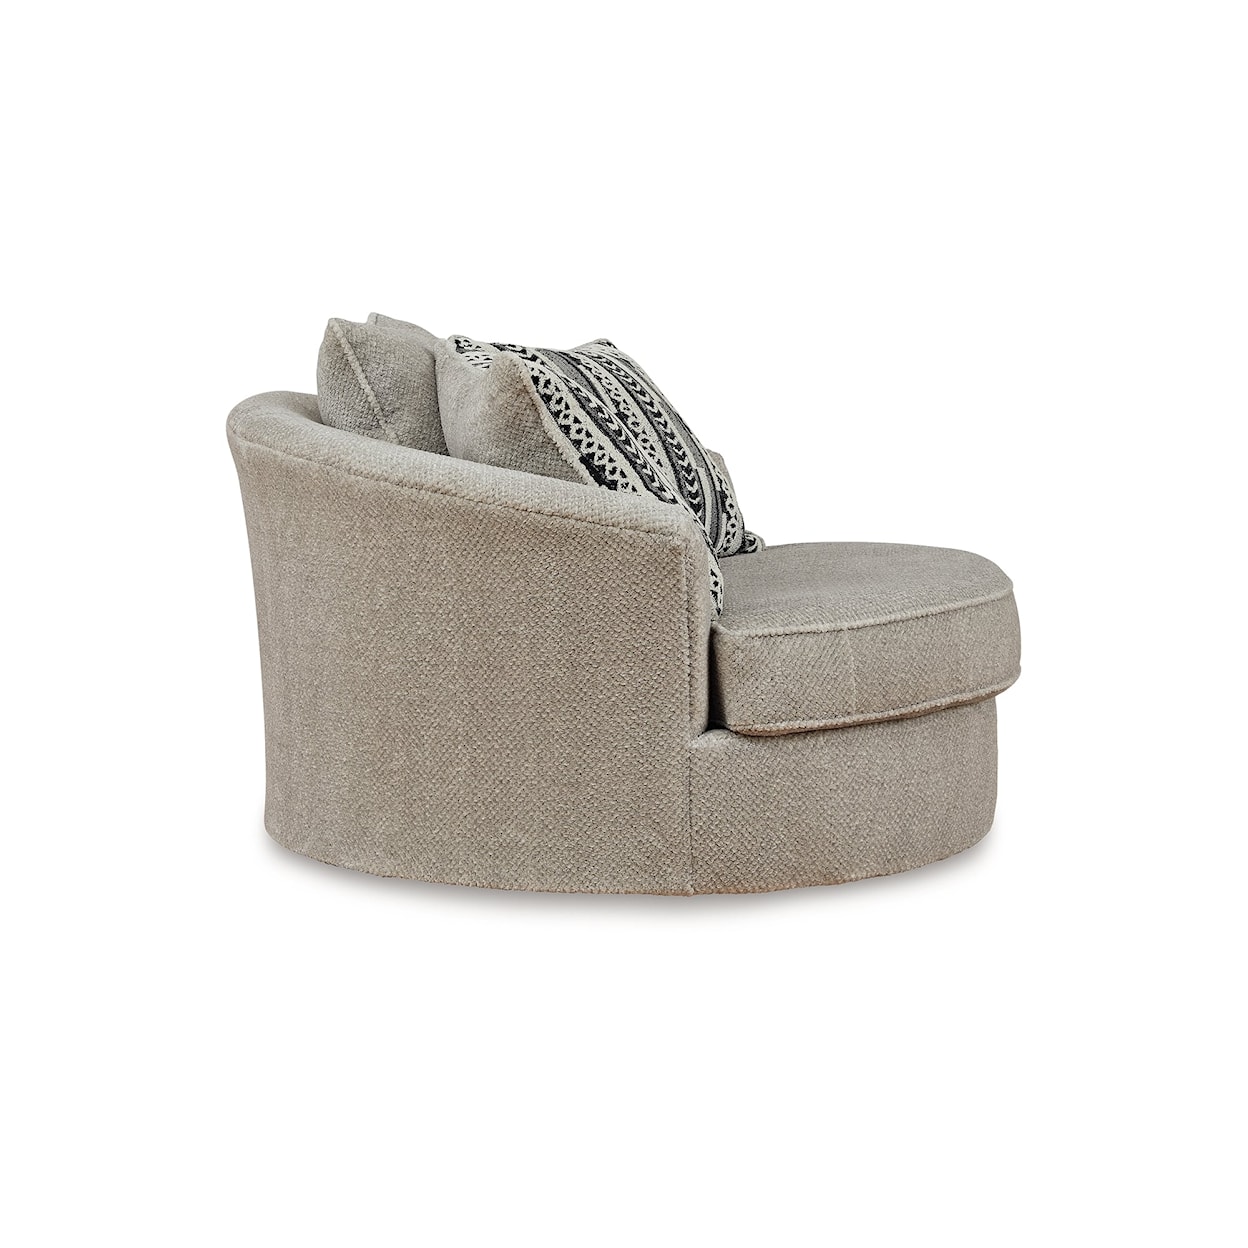 Ashley Furniture Benchcraft Calnita Oversized Swivel Accent Chair